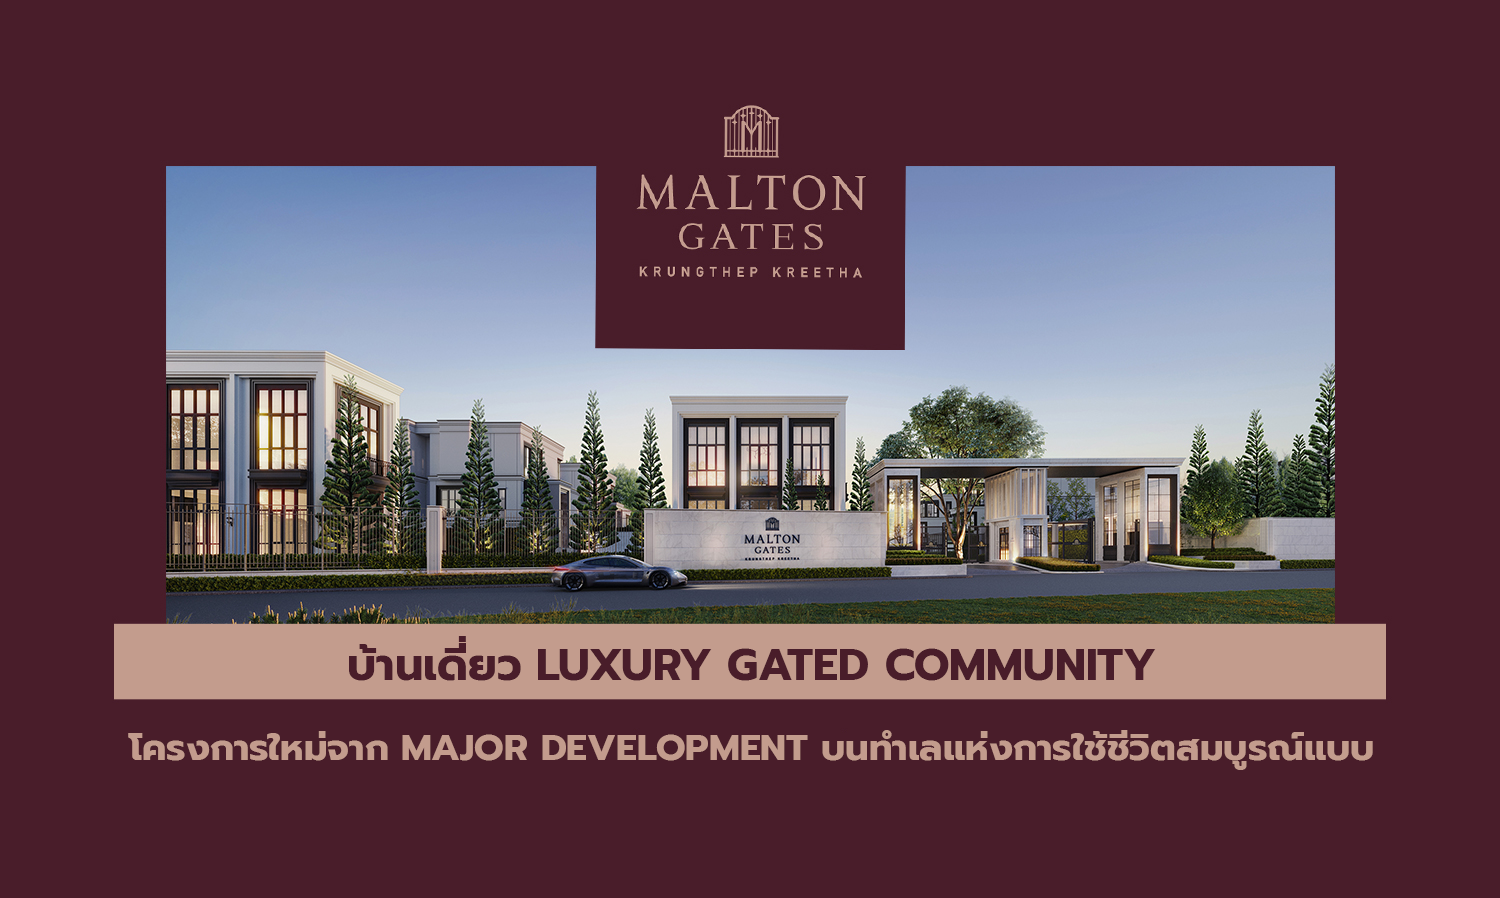 Malton Gates Krungthep Kreetha บ้านเดี่ยว Luxury Gated Community โครงการใหม่จาก Major Development บนทำเลแห่งการใช้ชีวิตสมบูรณ์แบบ